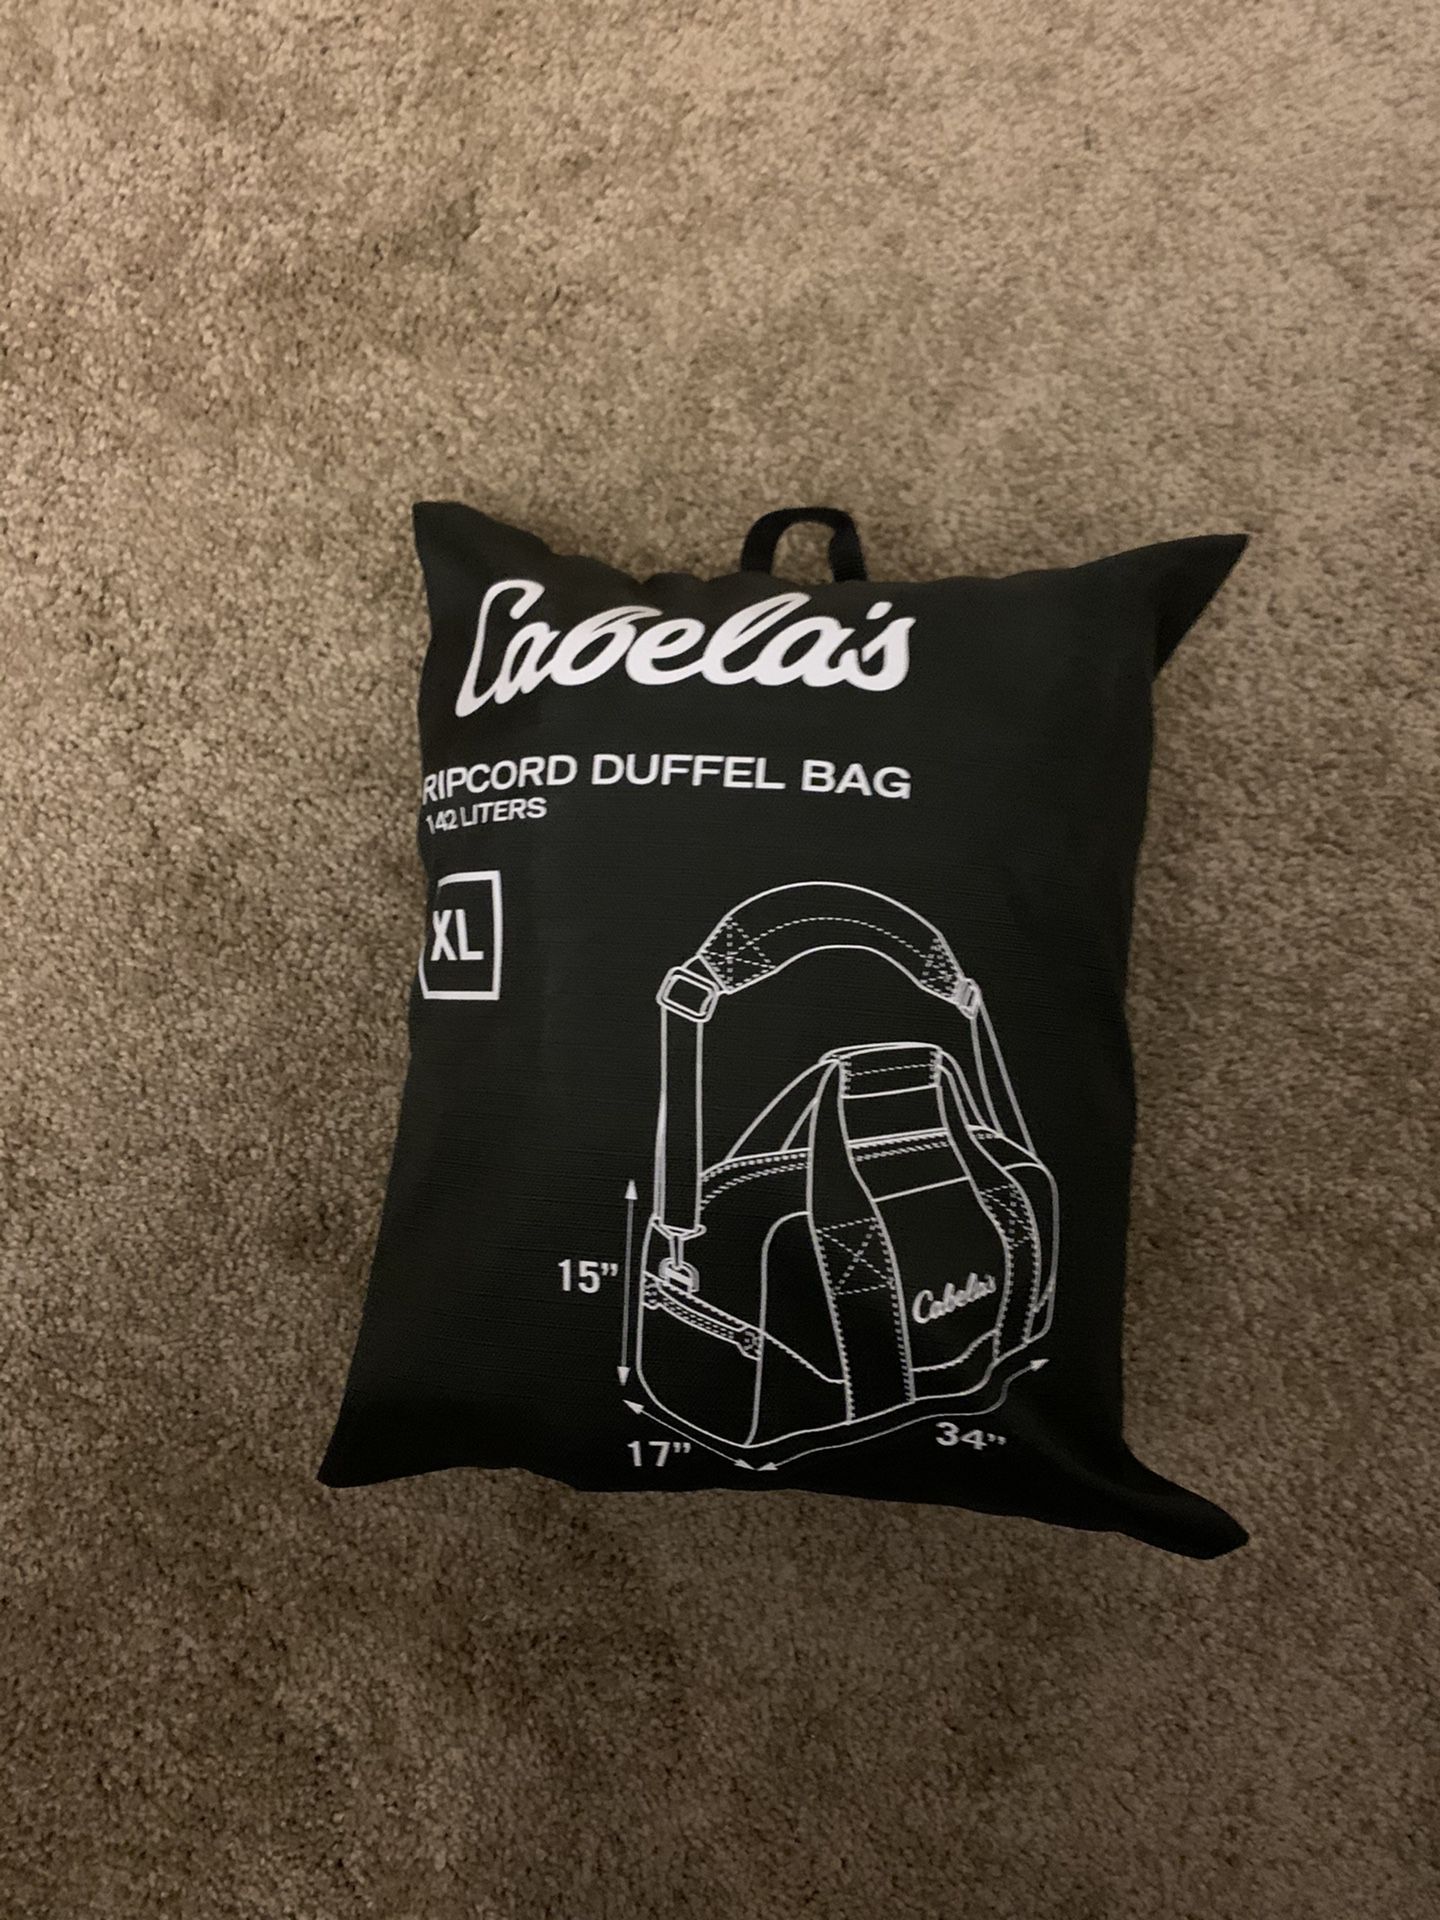 Cabela’s Ripcord Duffle Bag